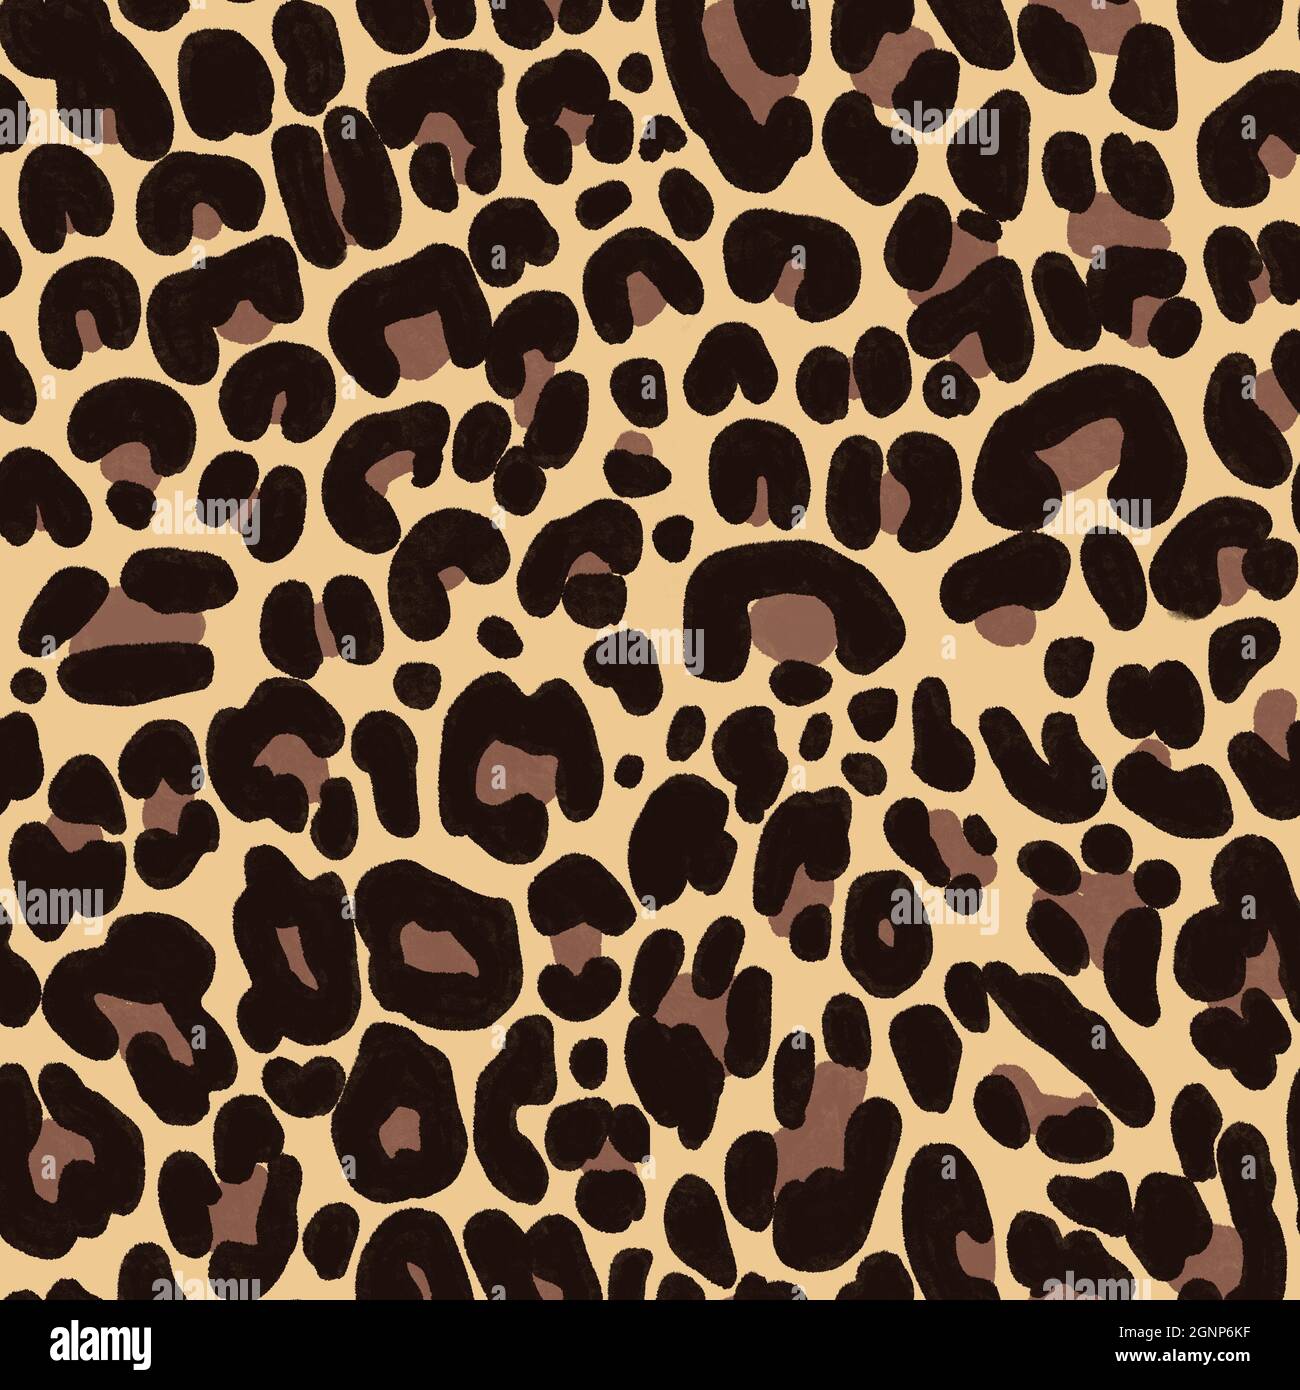 Digital Image Picture Photo Print Desktop Wallpaper Background Cheetah Art